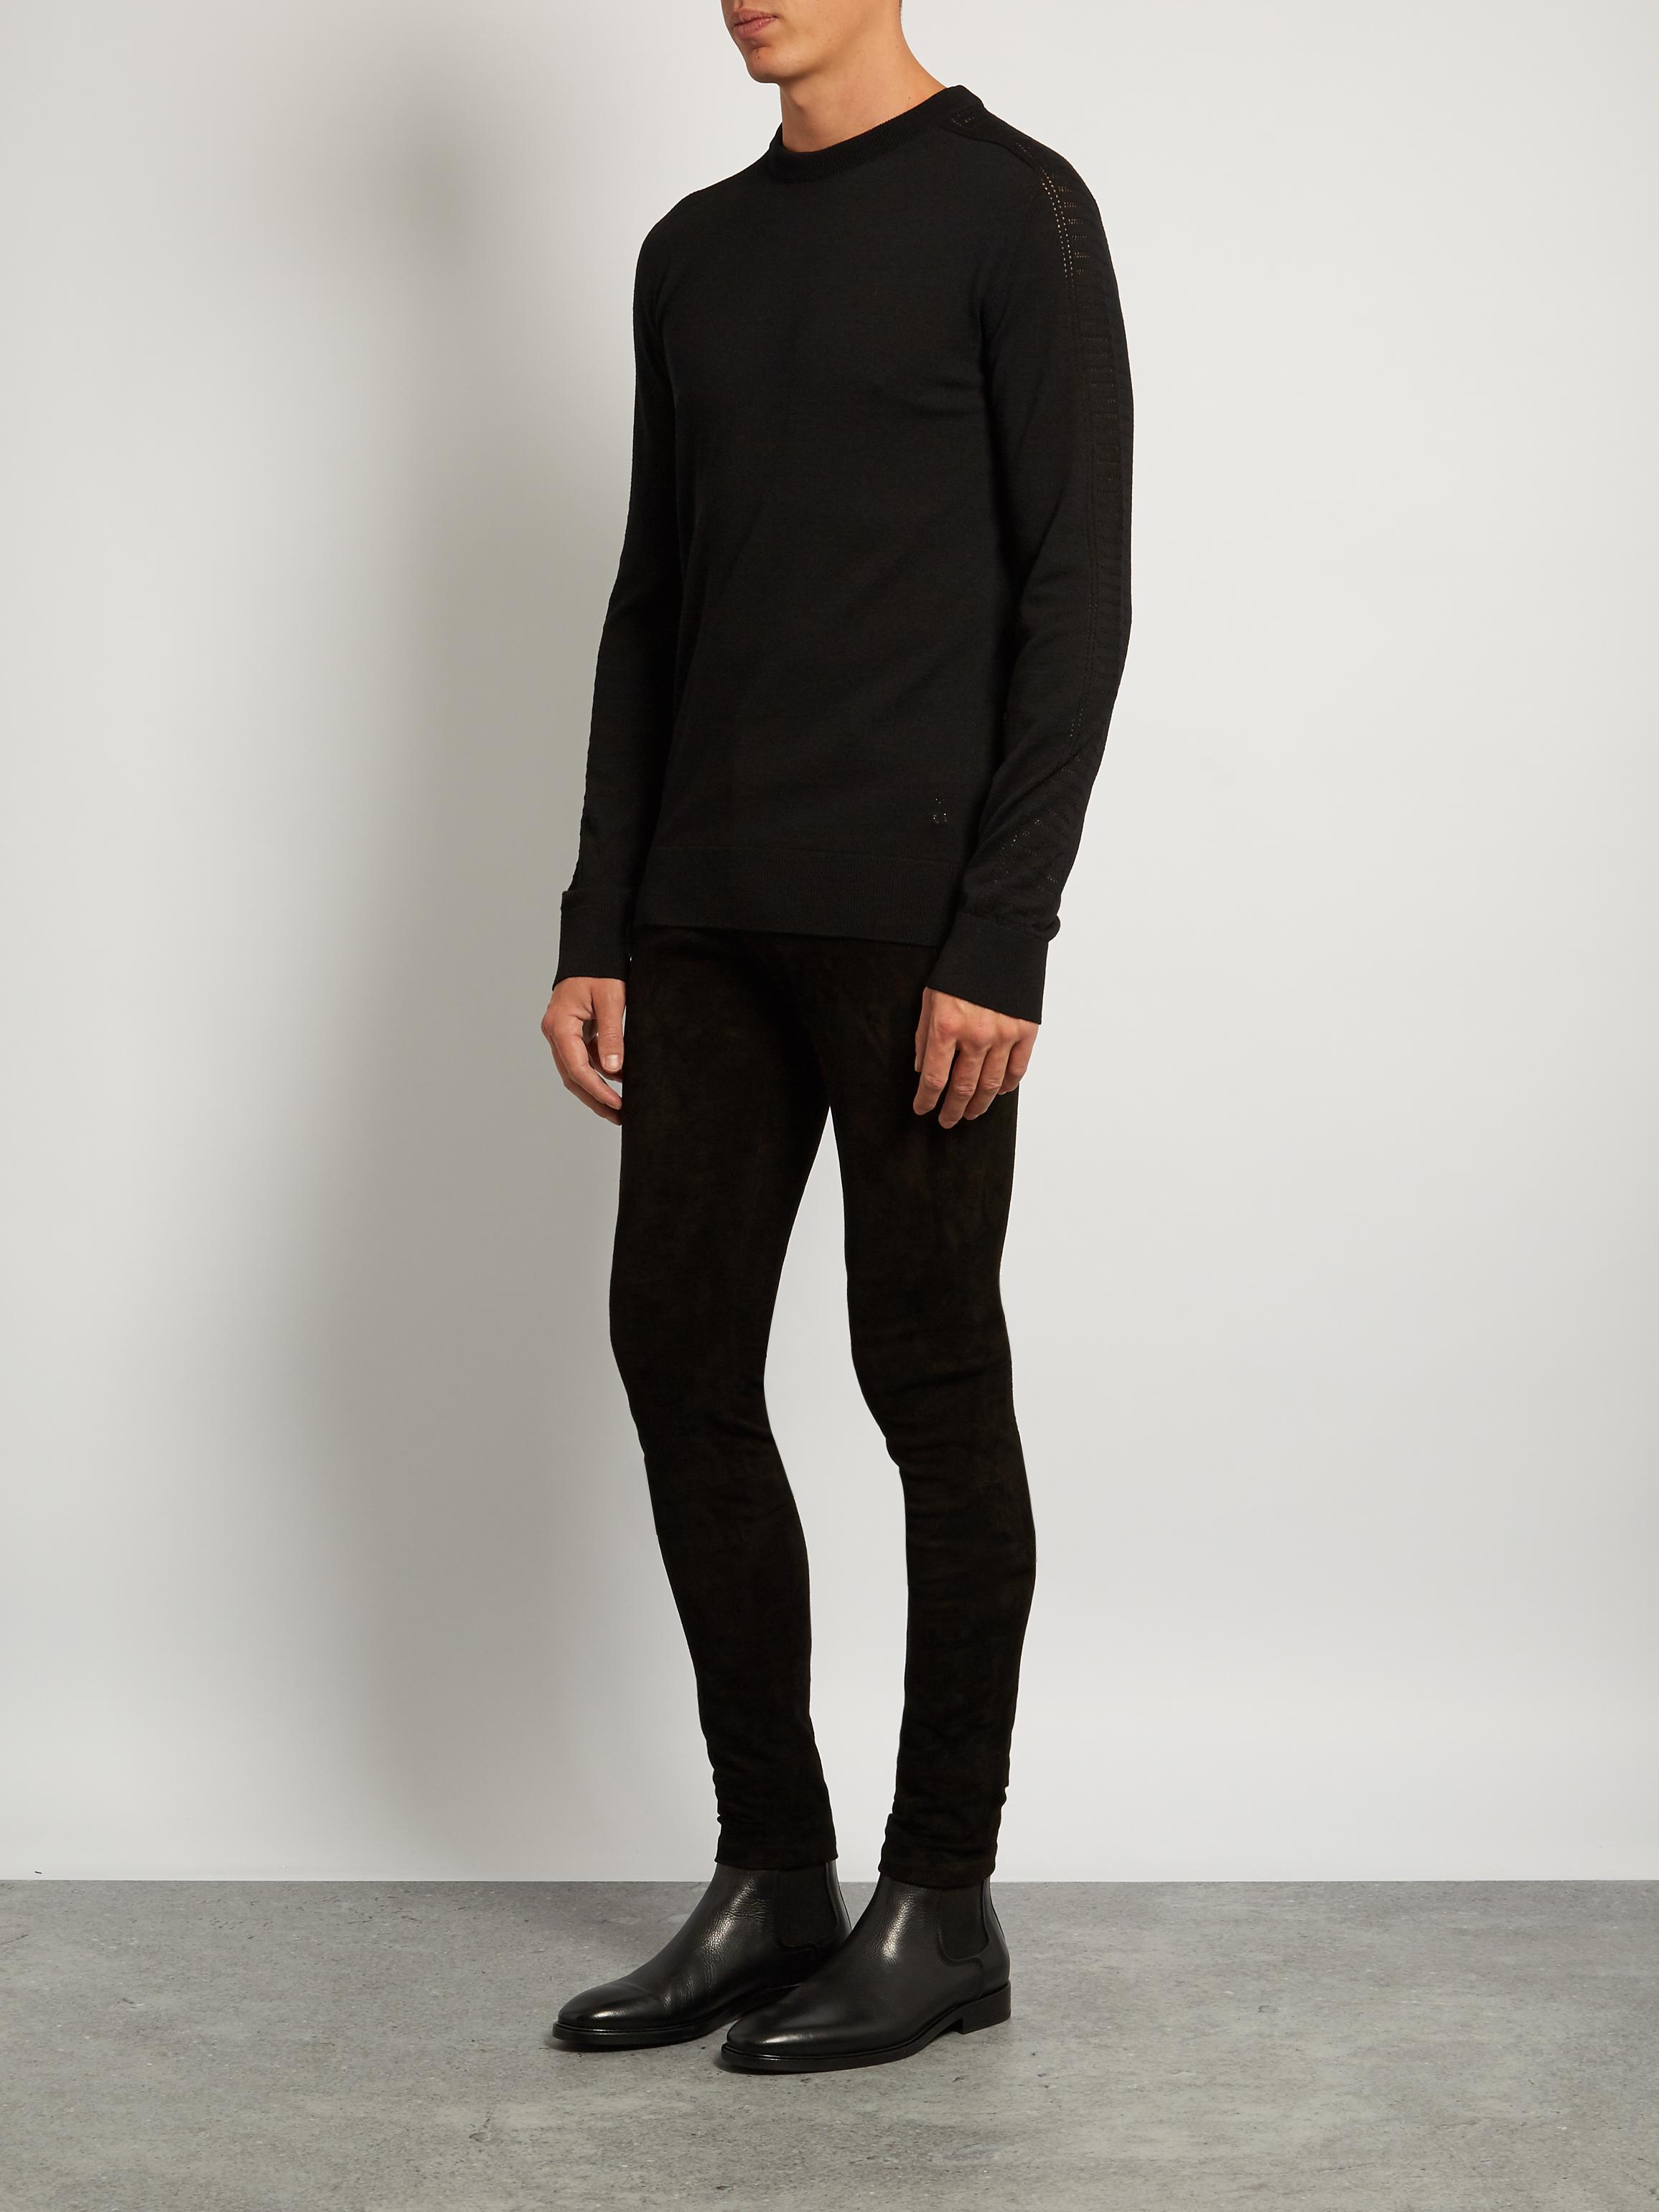 Lyst - Balmain Skinny-leg Suede Trousers in Black for Men